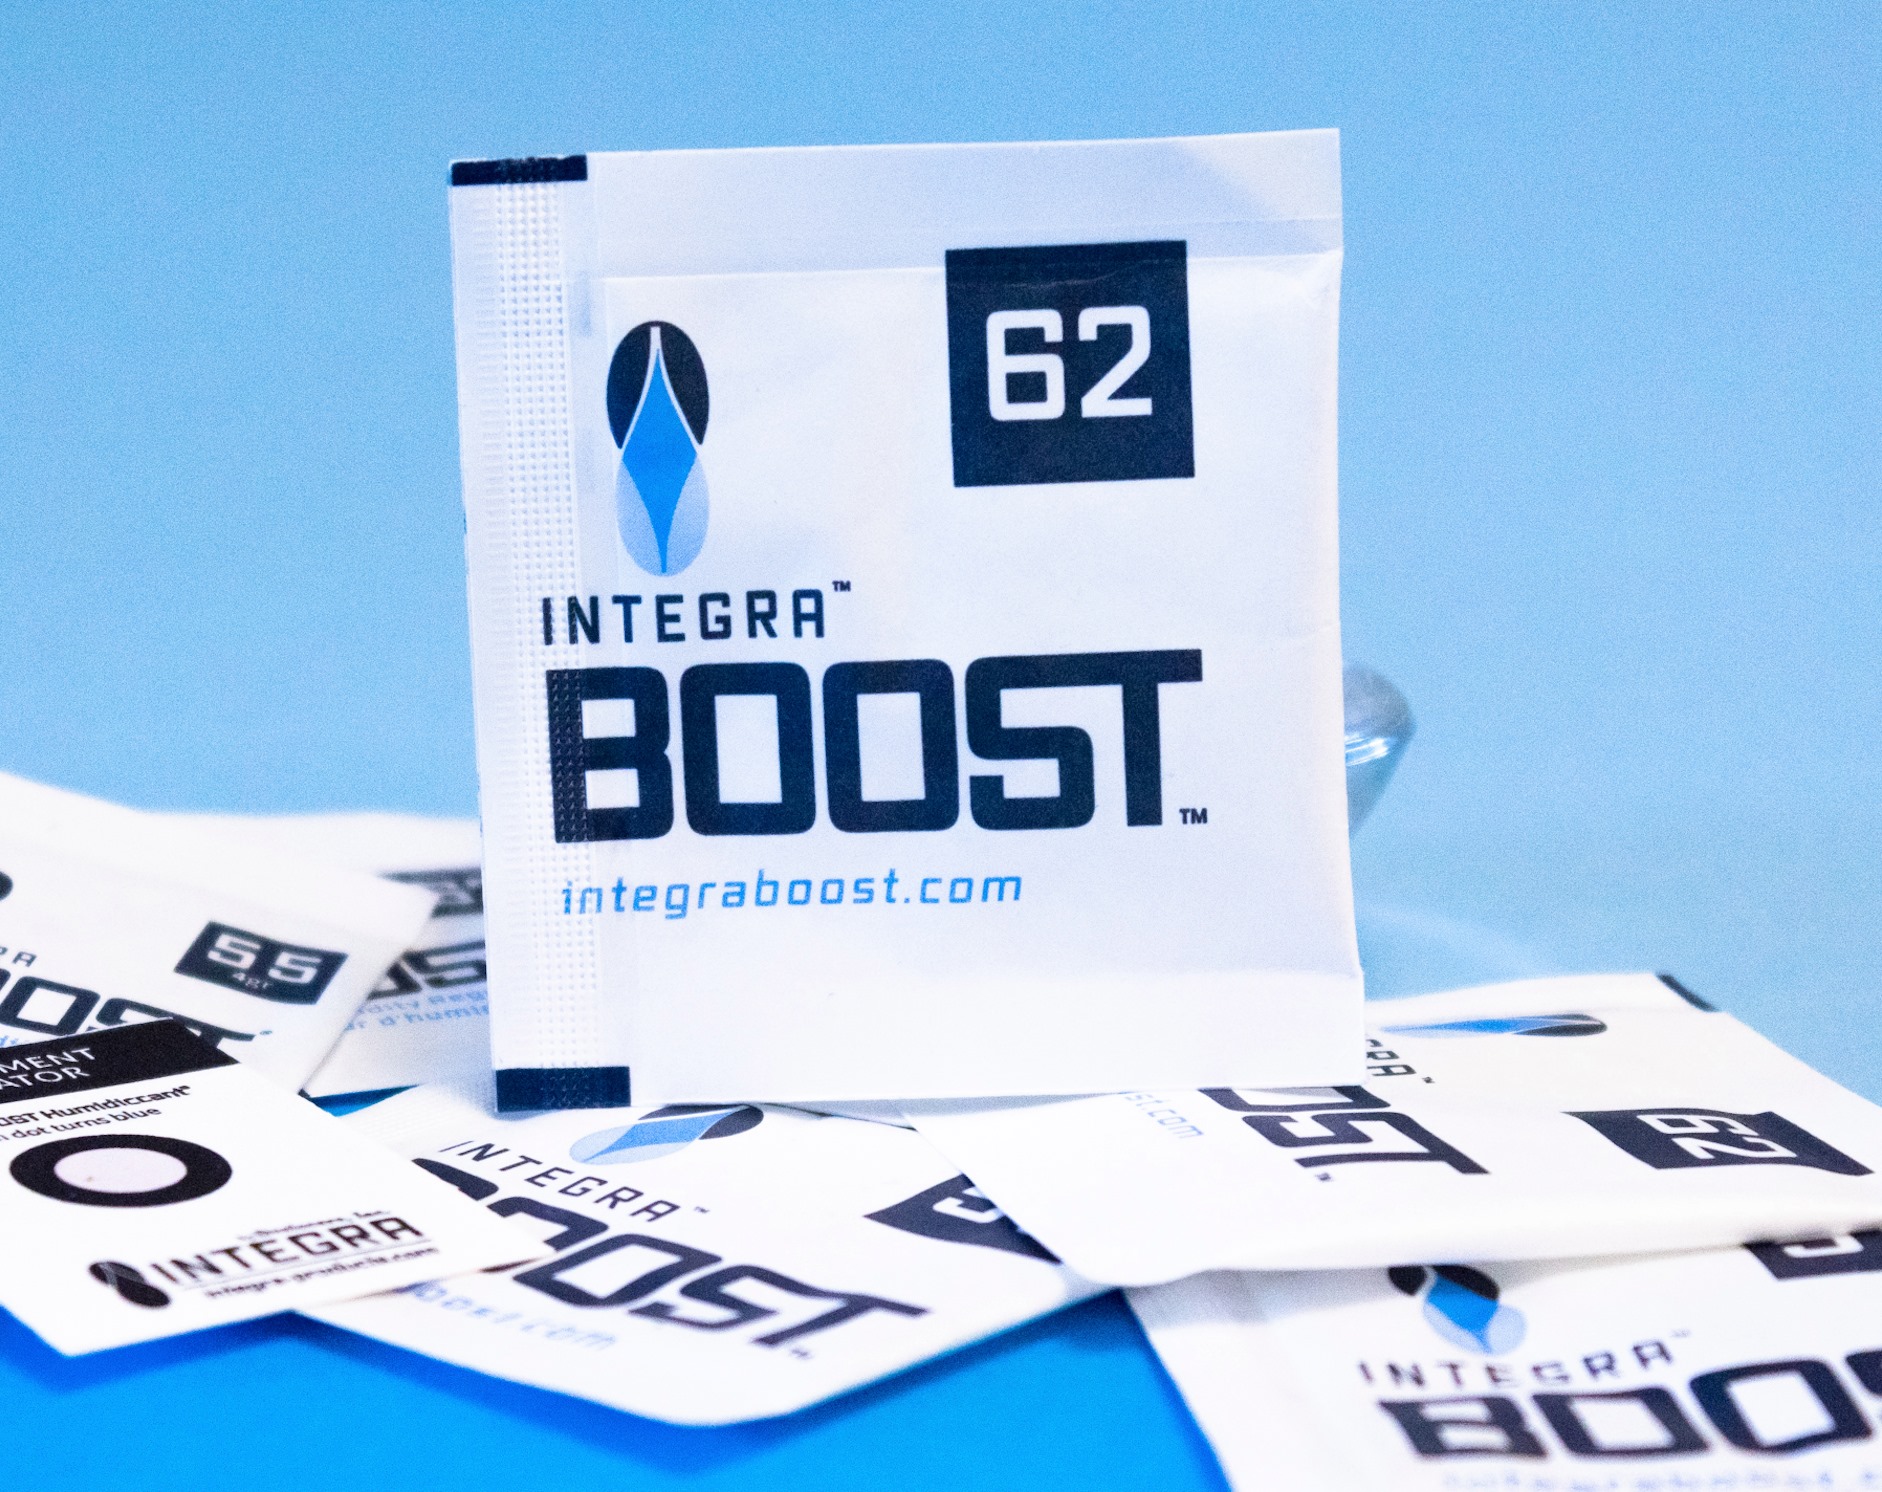 Desiccare 2 gram Integra BOOST® 62% RH 2-way humidity control packs